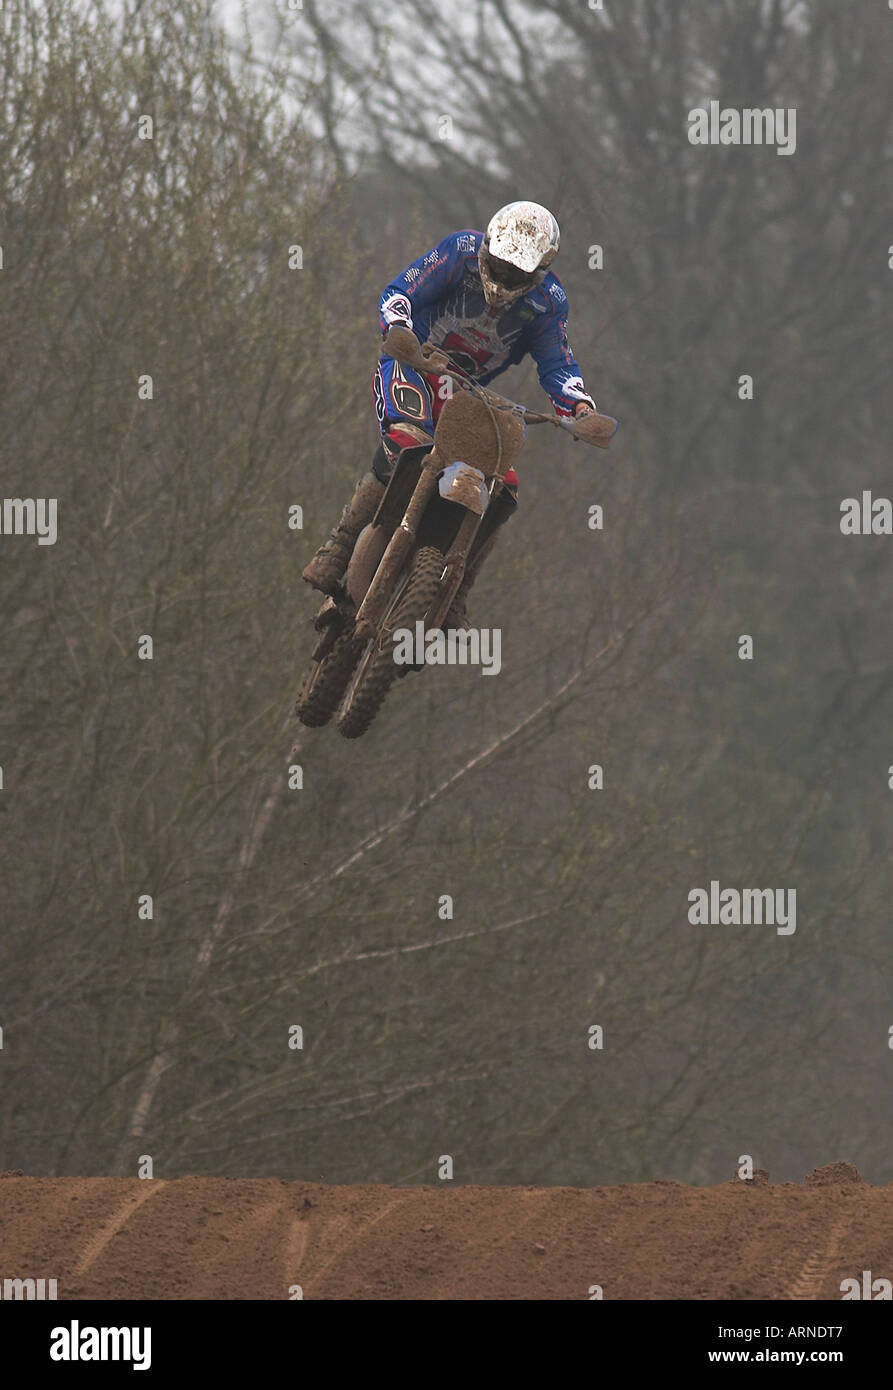 Jumping motocross driver Stock Photo